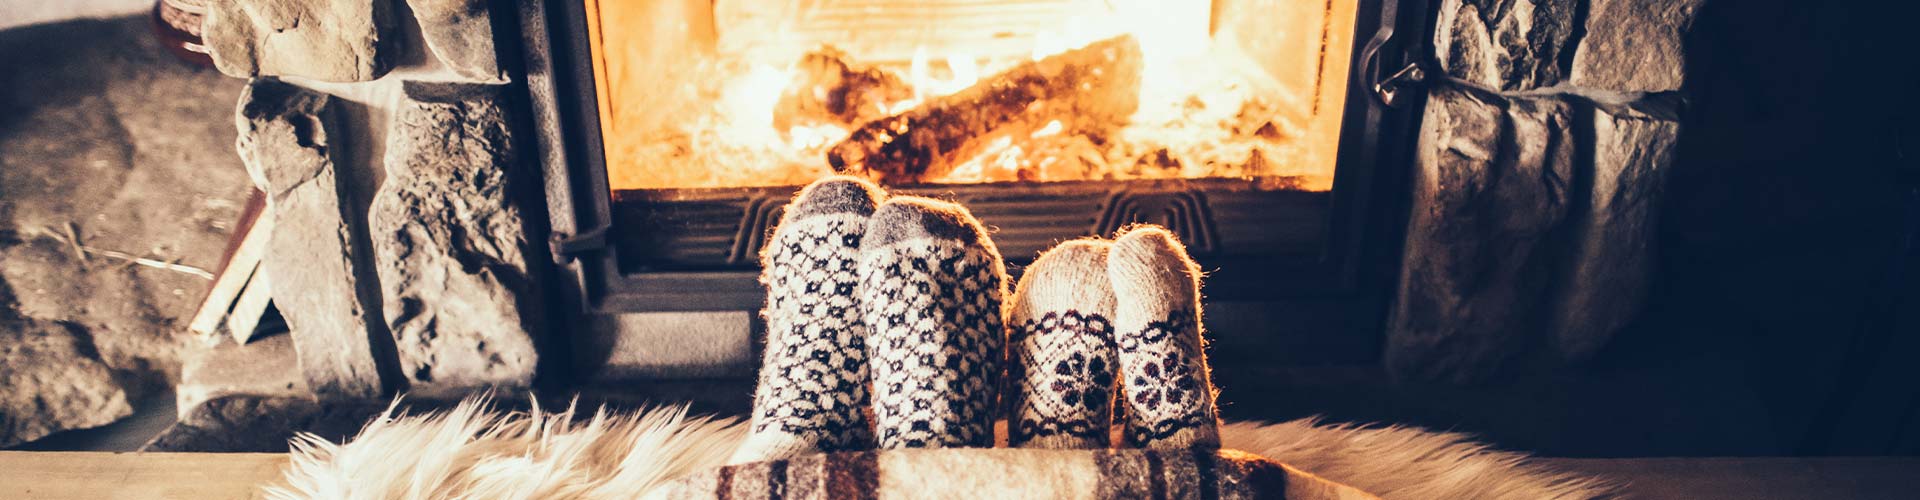 Feet By Fireplace